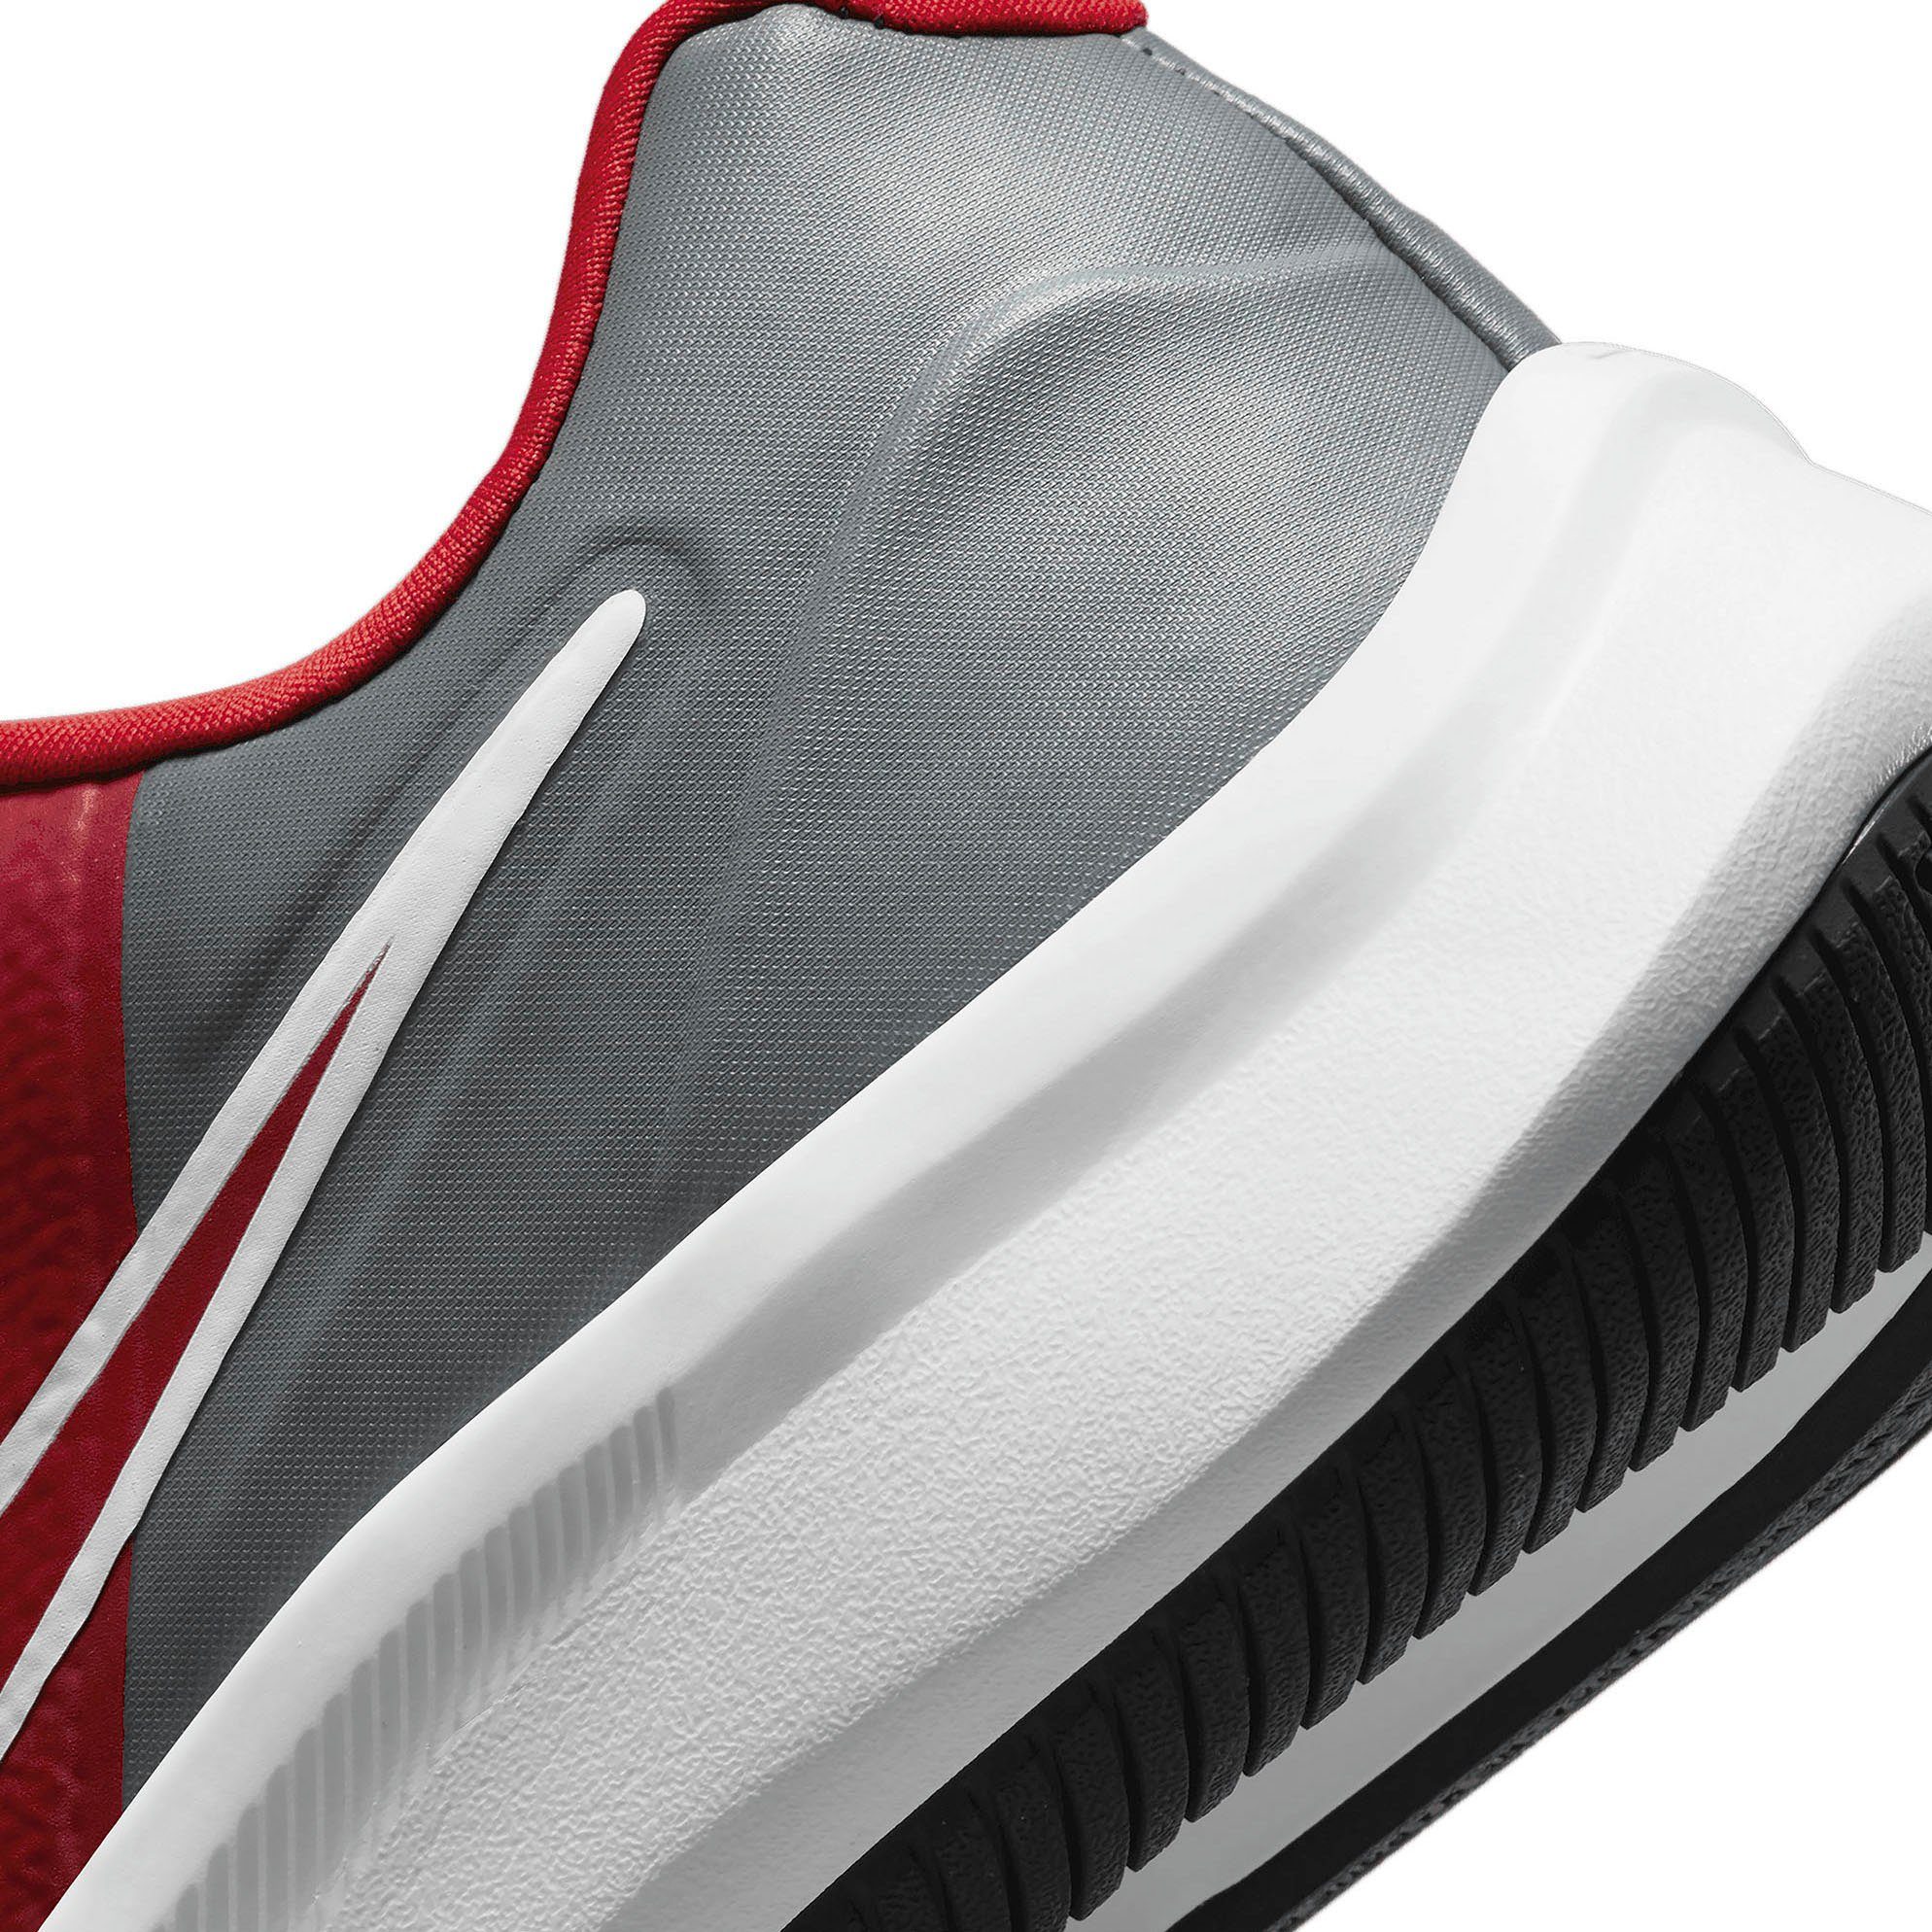 (GS) 3 Nike UNIVERSITY-RED-UNIVERSITY-RED-SMOKE-GREY Laufschuh STAR RUNNER